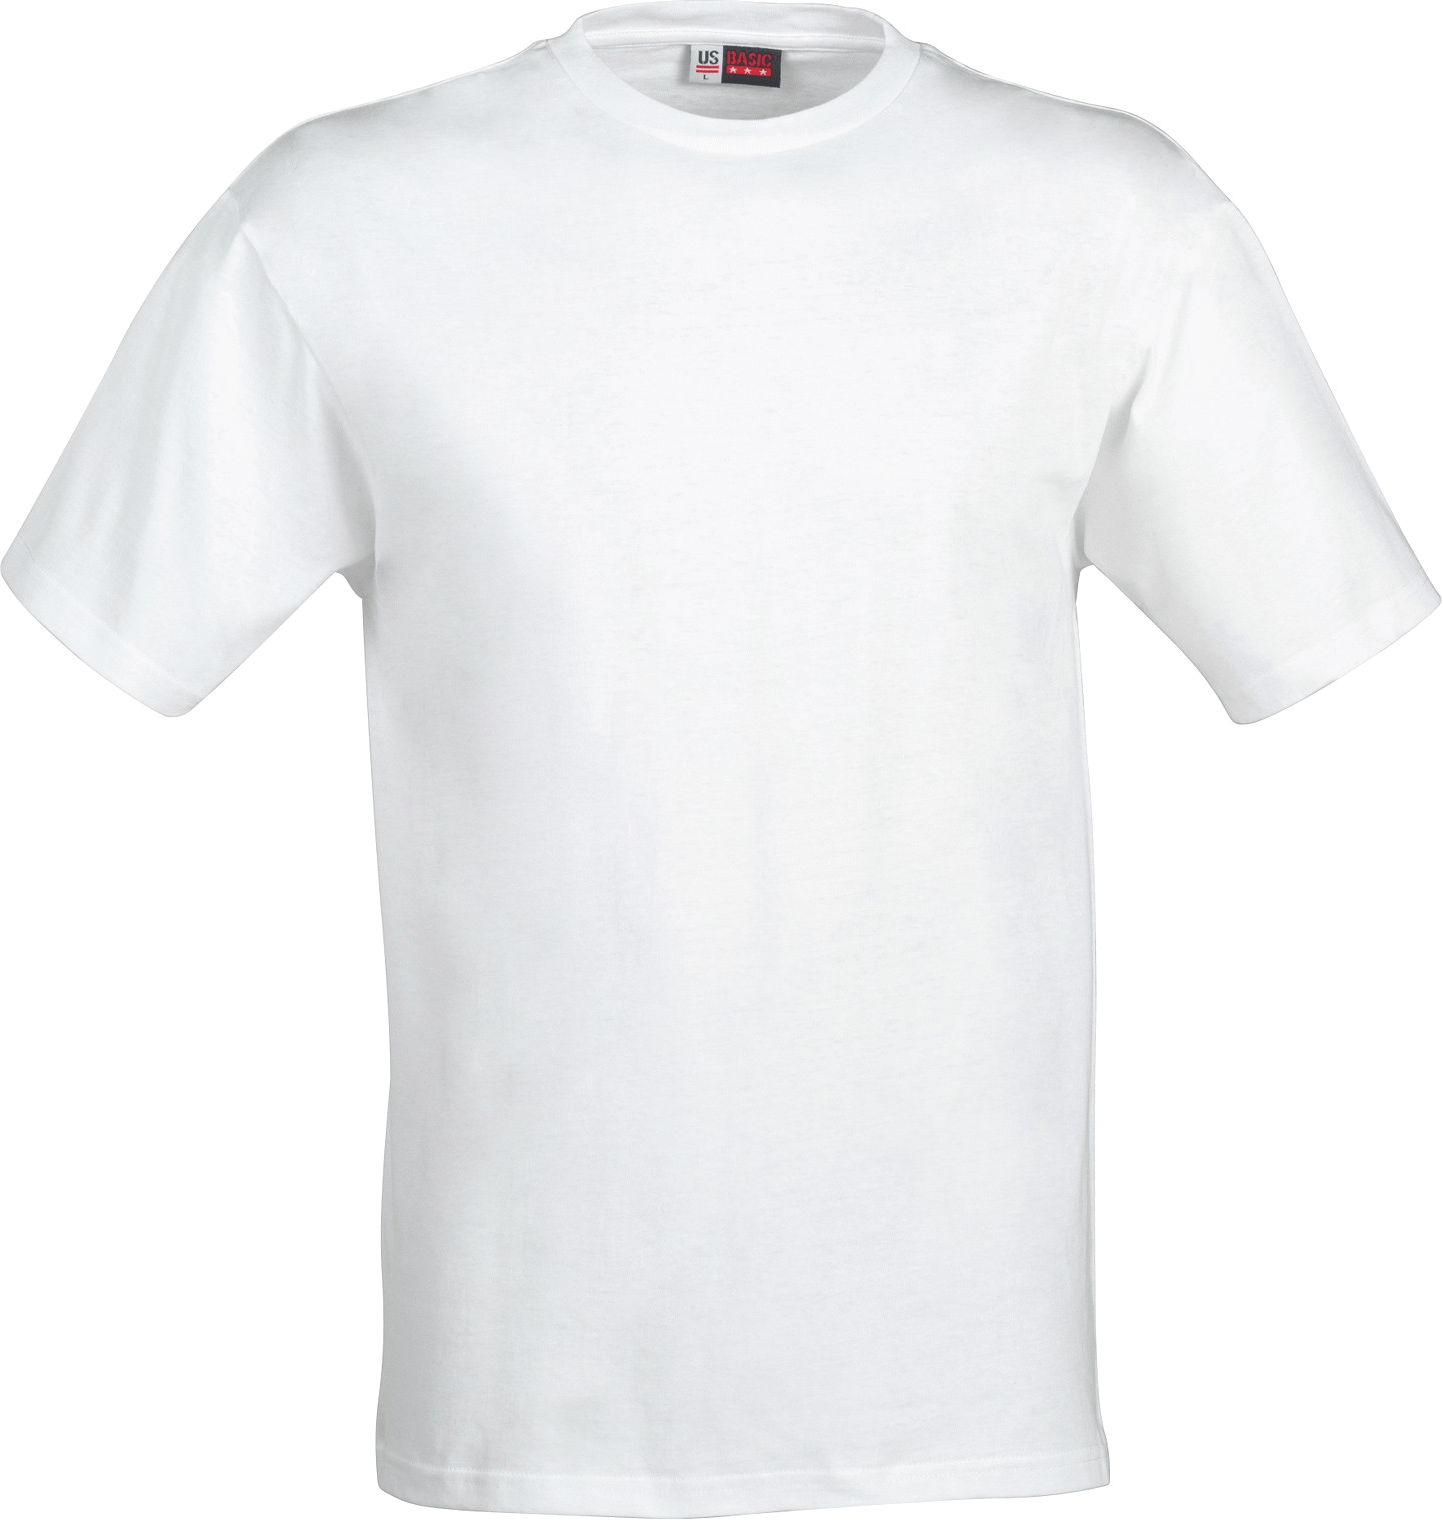 Download Download White T-Shirt Png Image HQ PNG Image | FreePNGImg